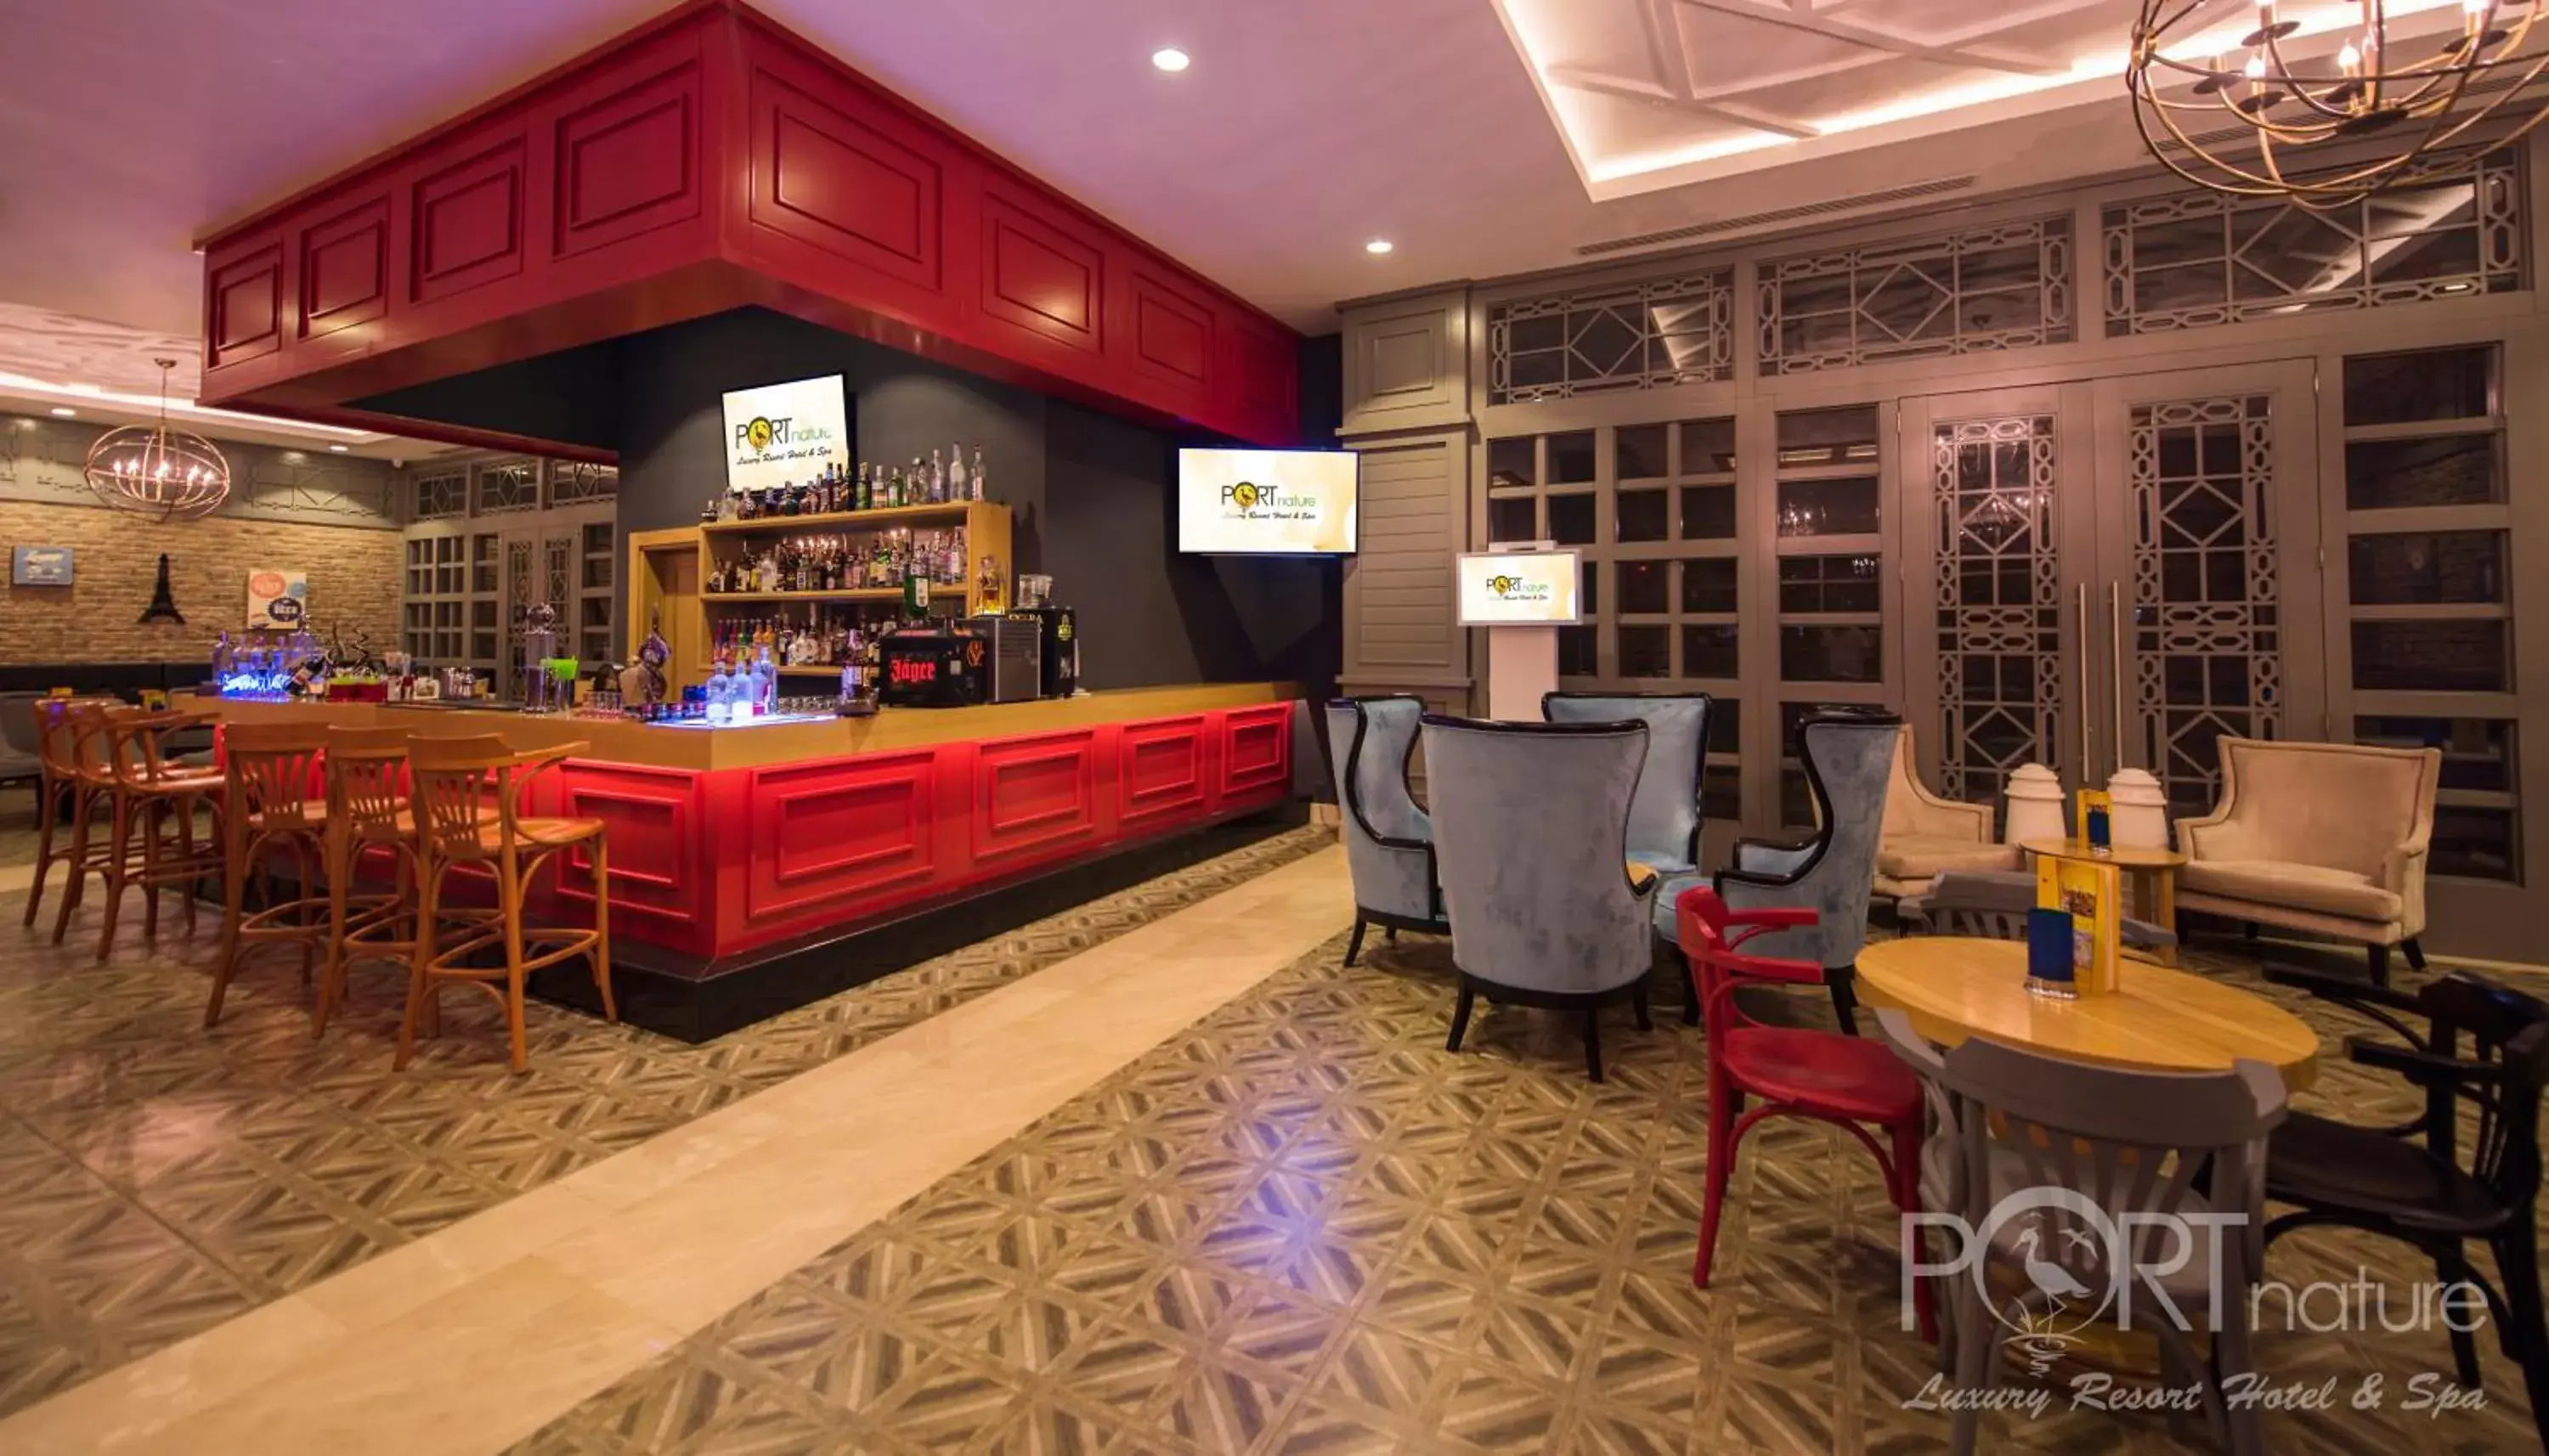 Lounge or bar, Lounge/Bar in Port Nature Luxury Resort